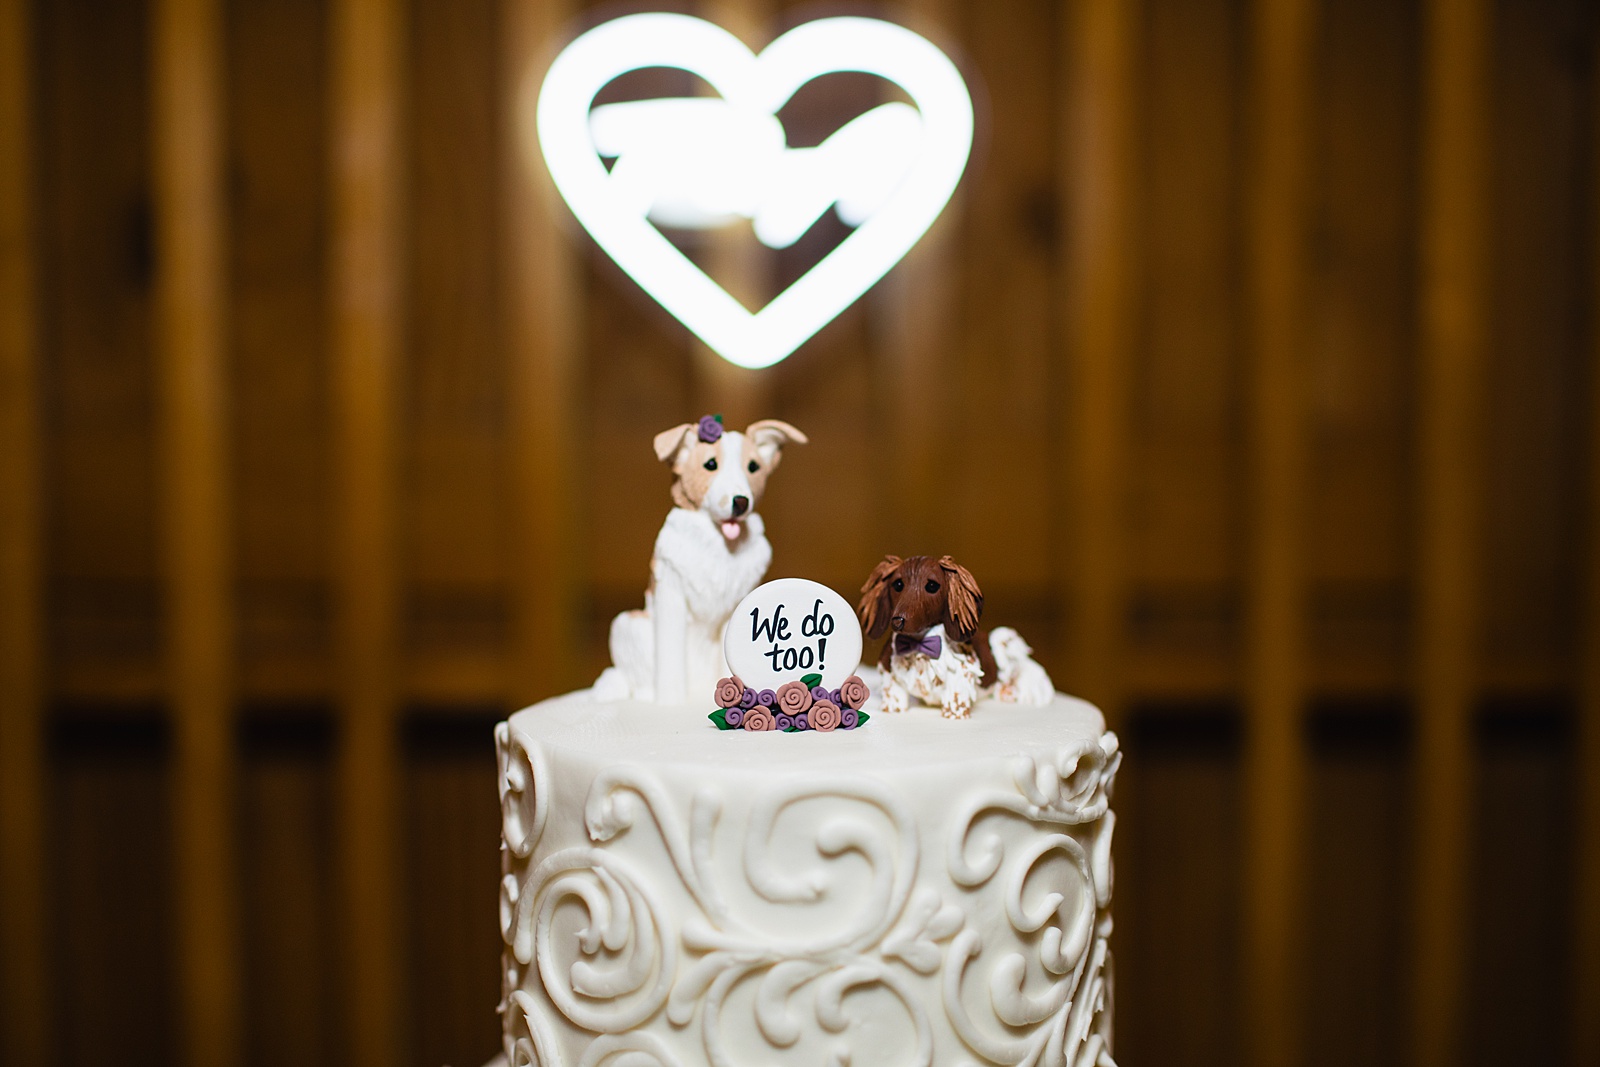 Puppy dog cake topper on white wedding cake by Arizona wedding photographer Juniper and Co Photography.